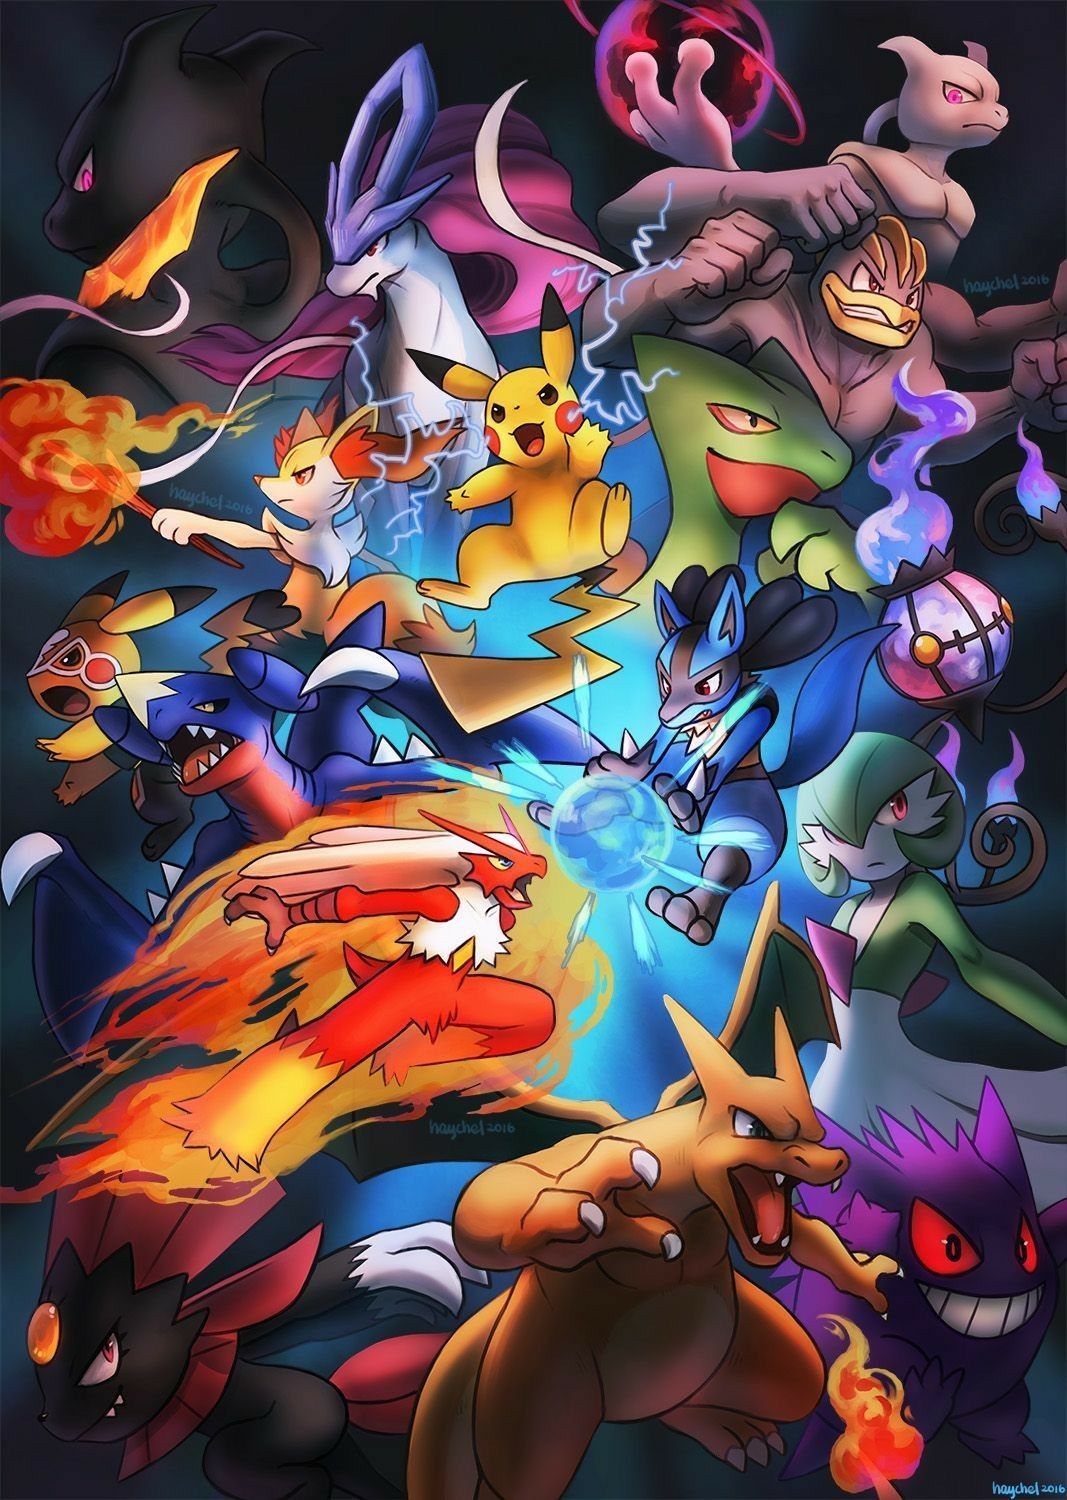 Pokken tournament. Pokemon, Pokemon firered, Pokemon drawings